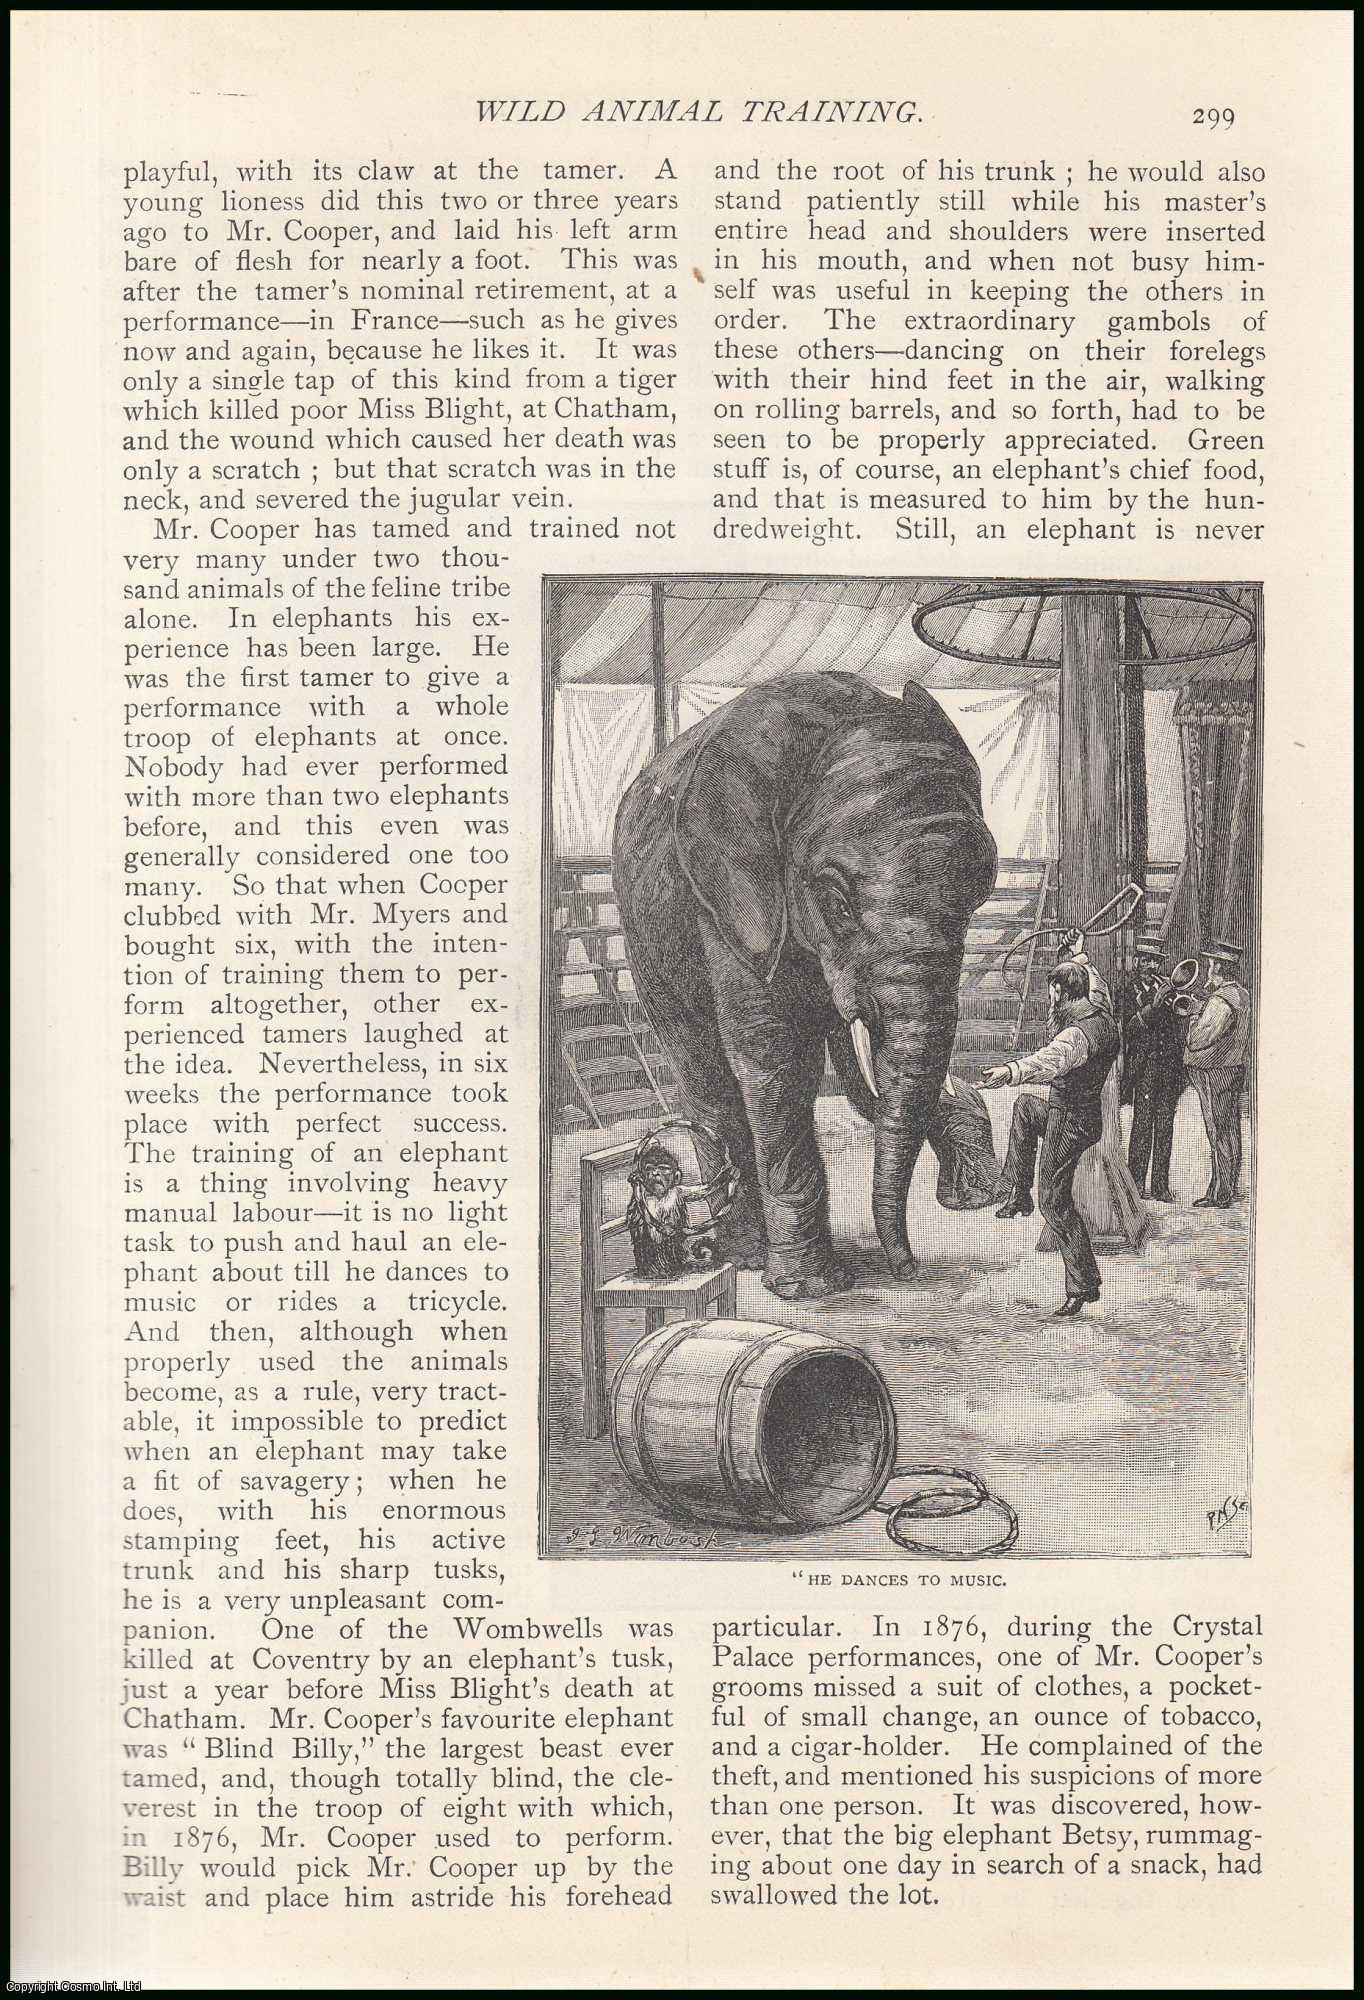 Strand Magazine - Wild Animal Training : animal tamers. An uncommon original article from The Strand Magazine, 1891.